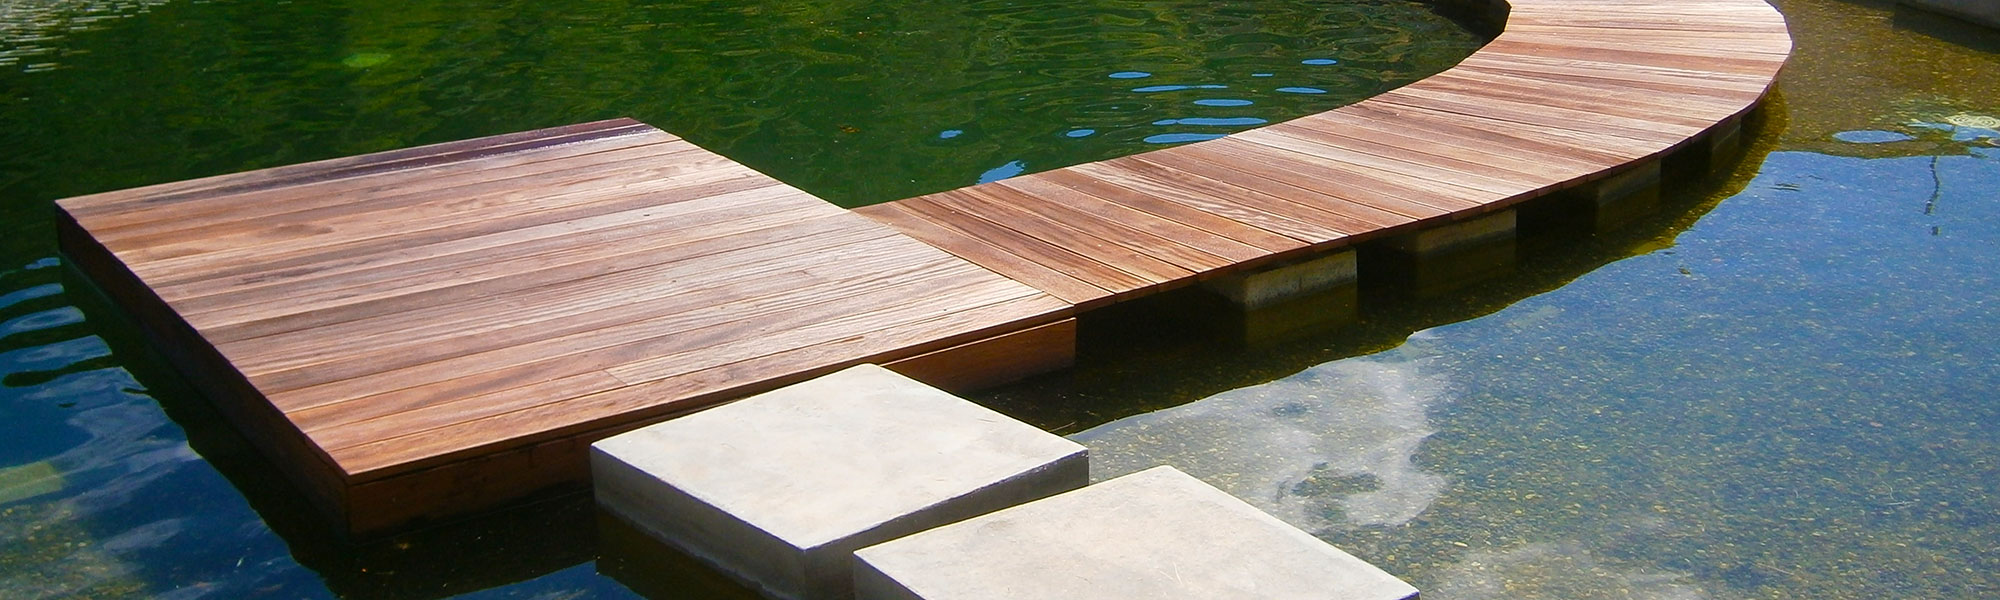 Wood deck on water